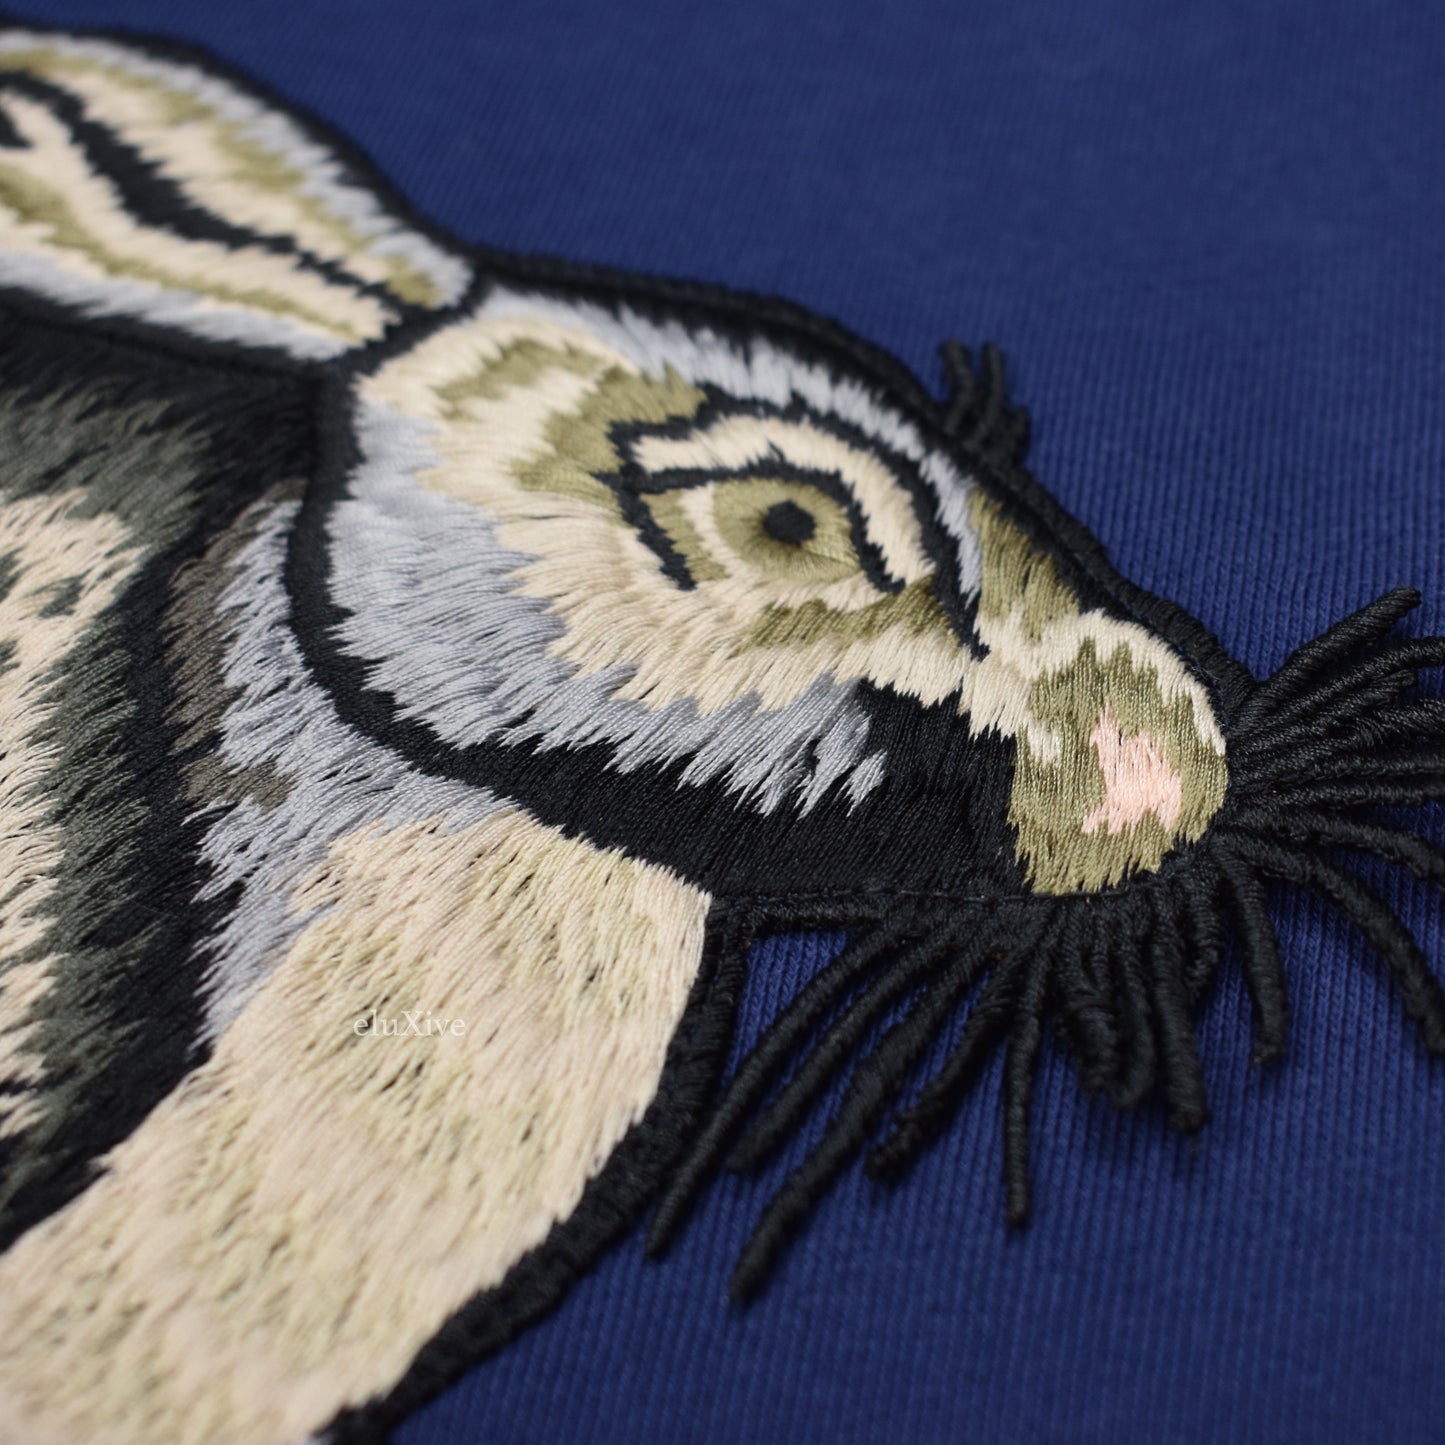 Gucci - Blue Rabbit Embroidered Sweatshirt